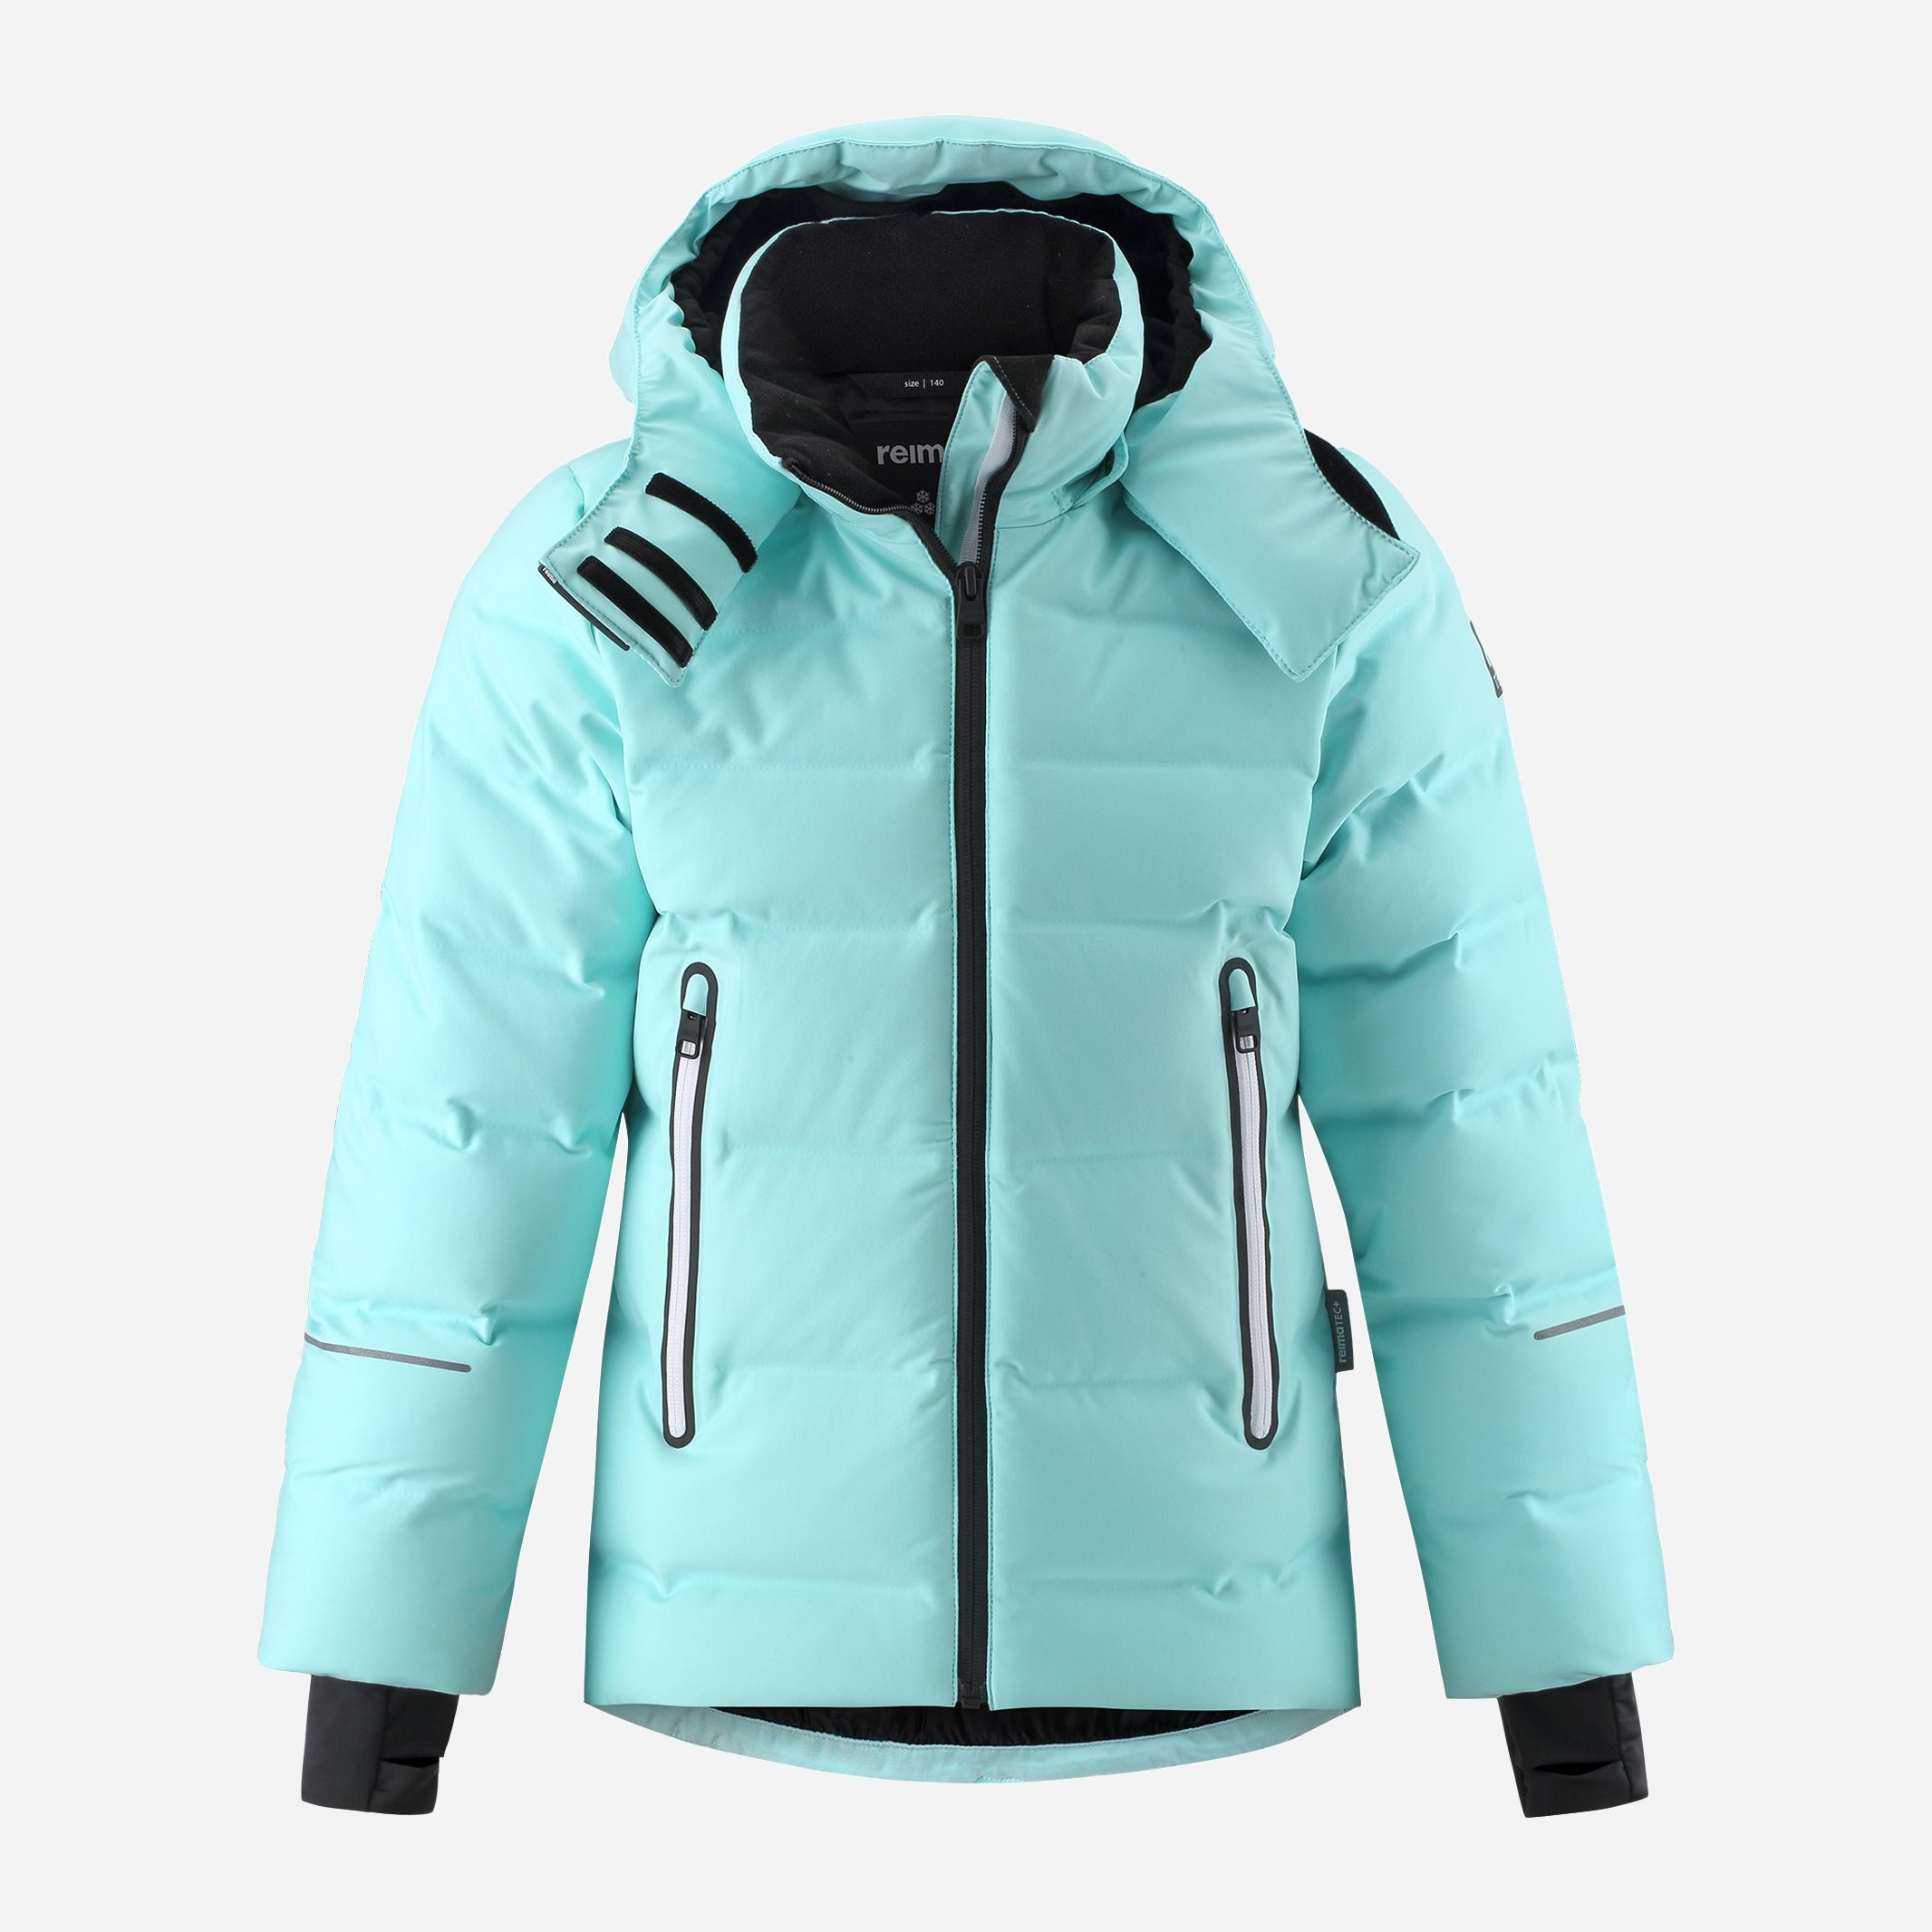 Акция на Дитяча зимова термо лижна куртка для дівчинки Reima Waken 531426-7150 122 см от Rozetka